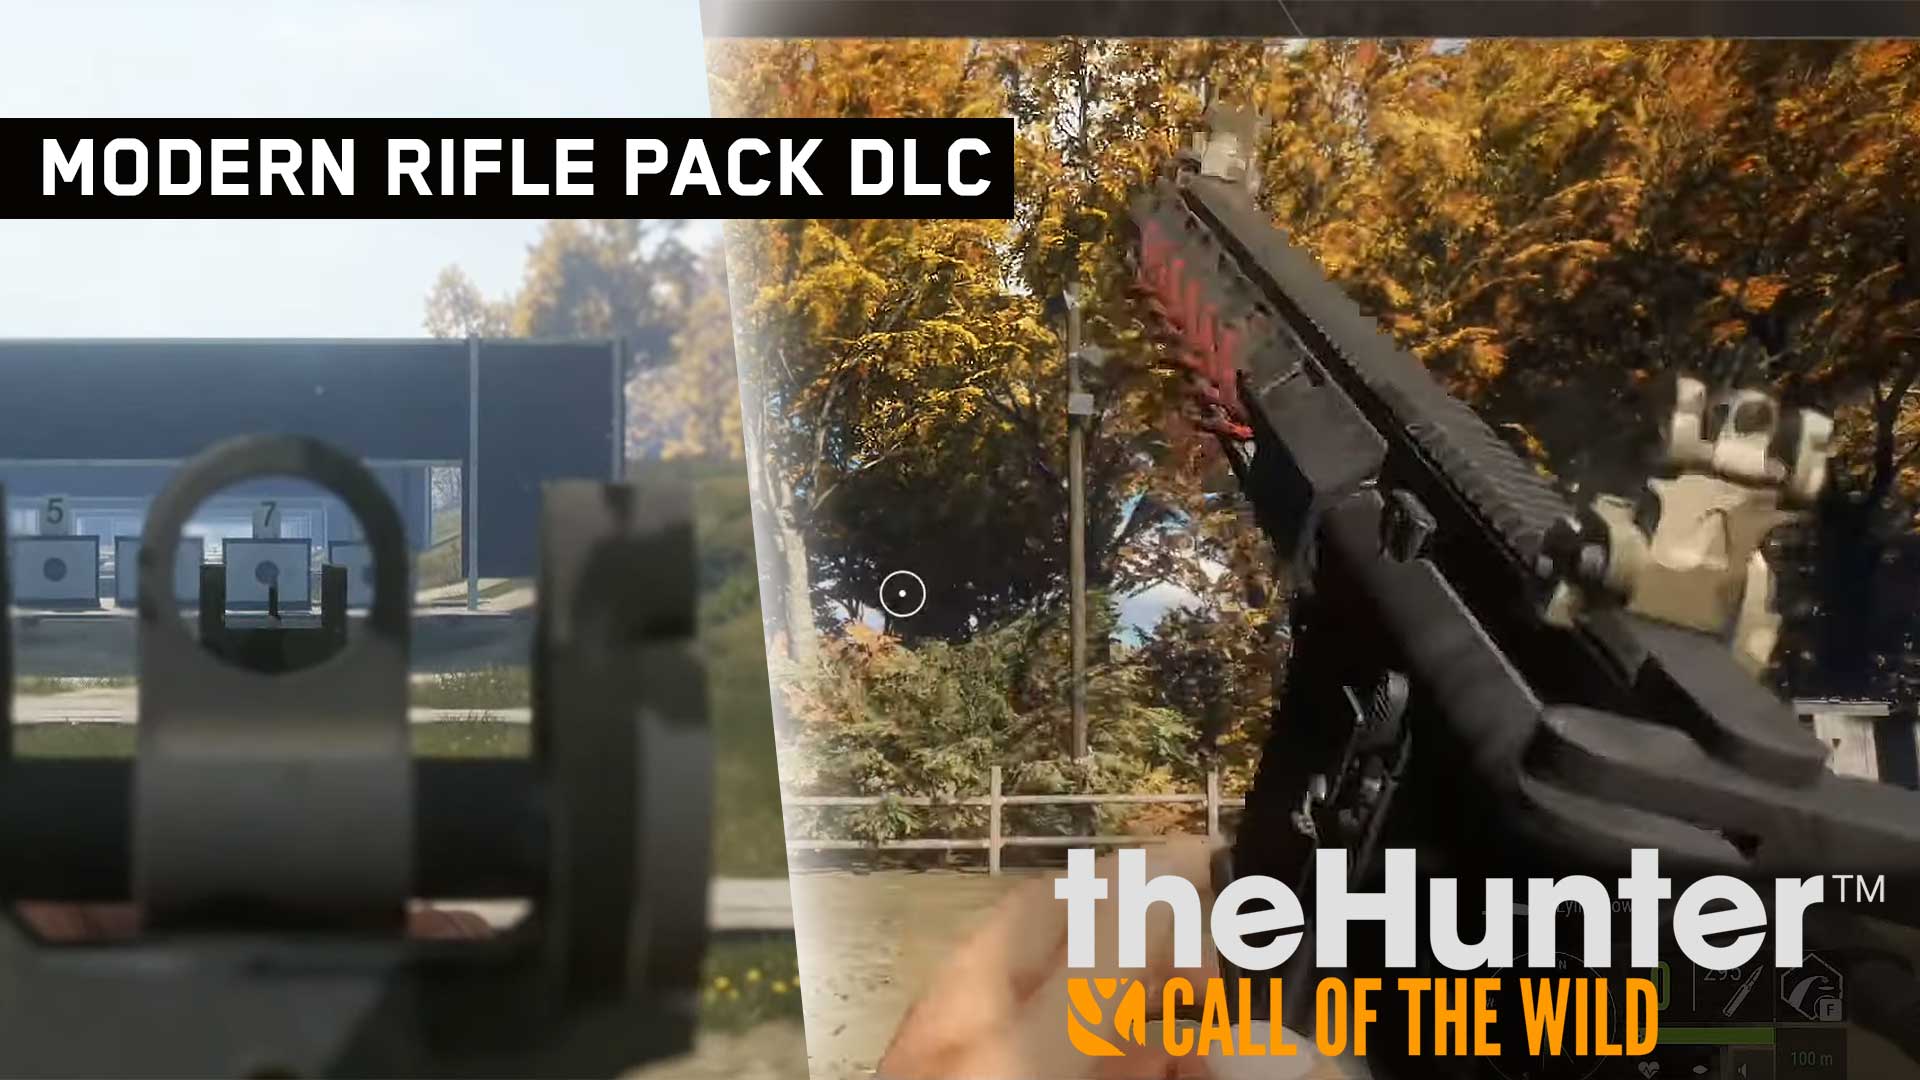 thehunter cotw modern rifle pack